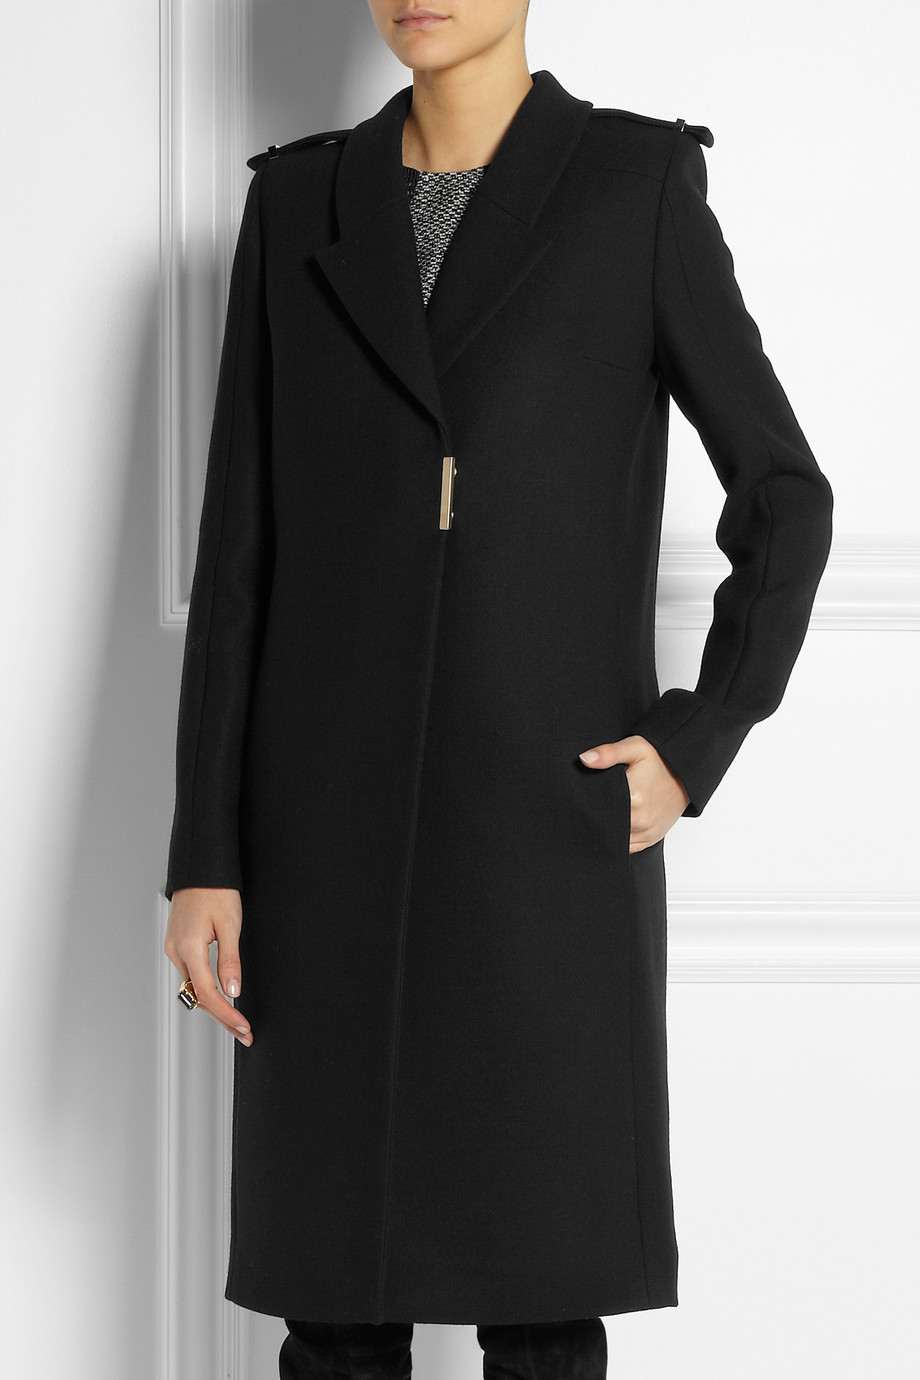 Lyst - Victoria beckham Wool Coat in Black